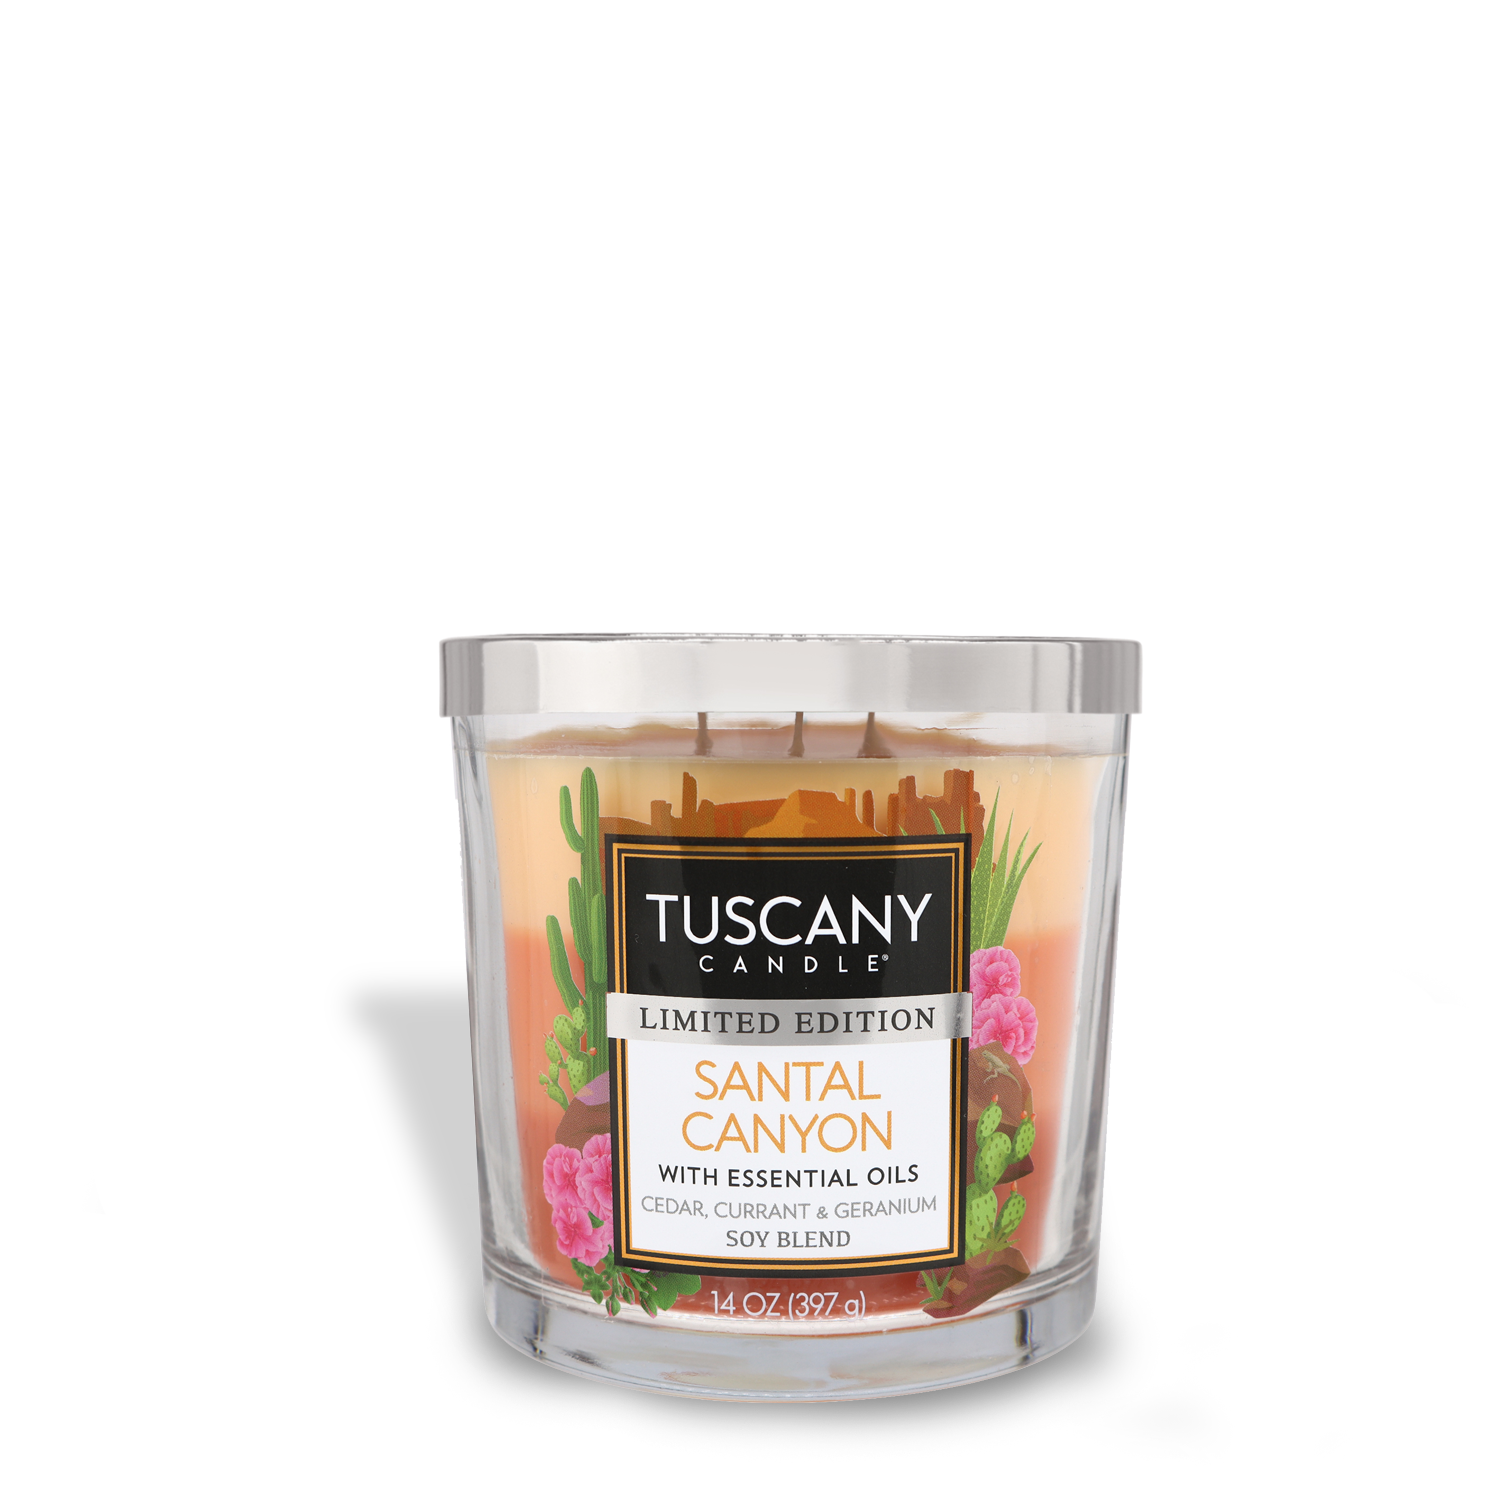 Santal Canyon Long-Lasting Scented Jar Candle (14 oz) by Tuscany Candle® SEASONAL